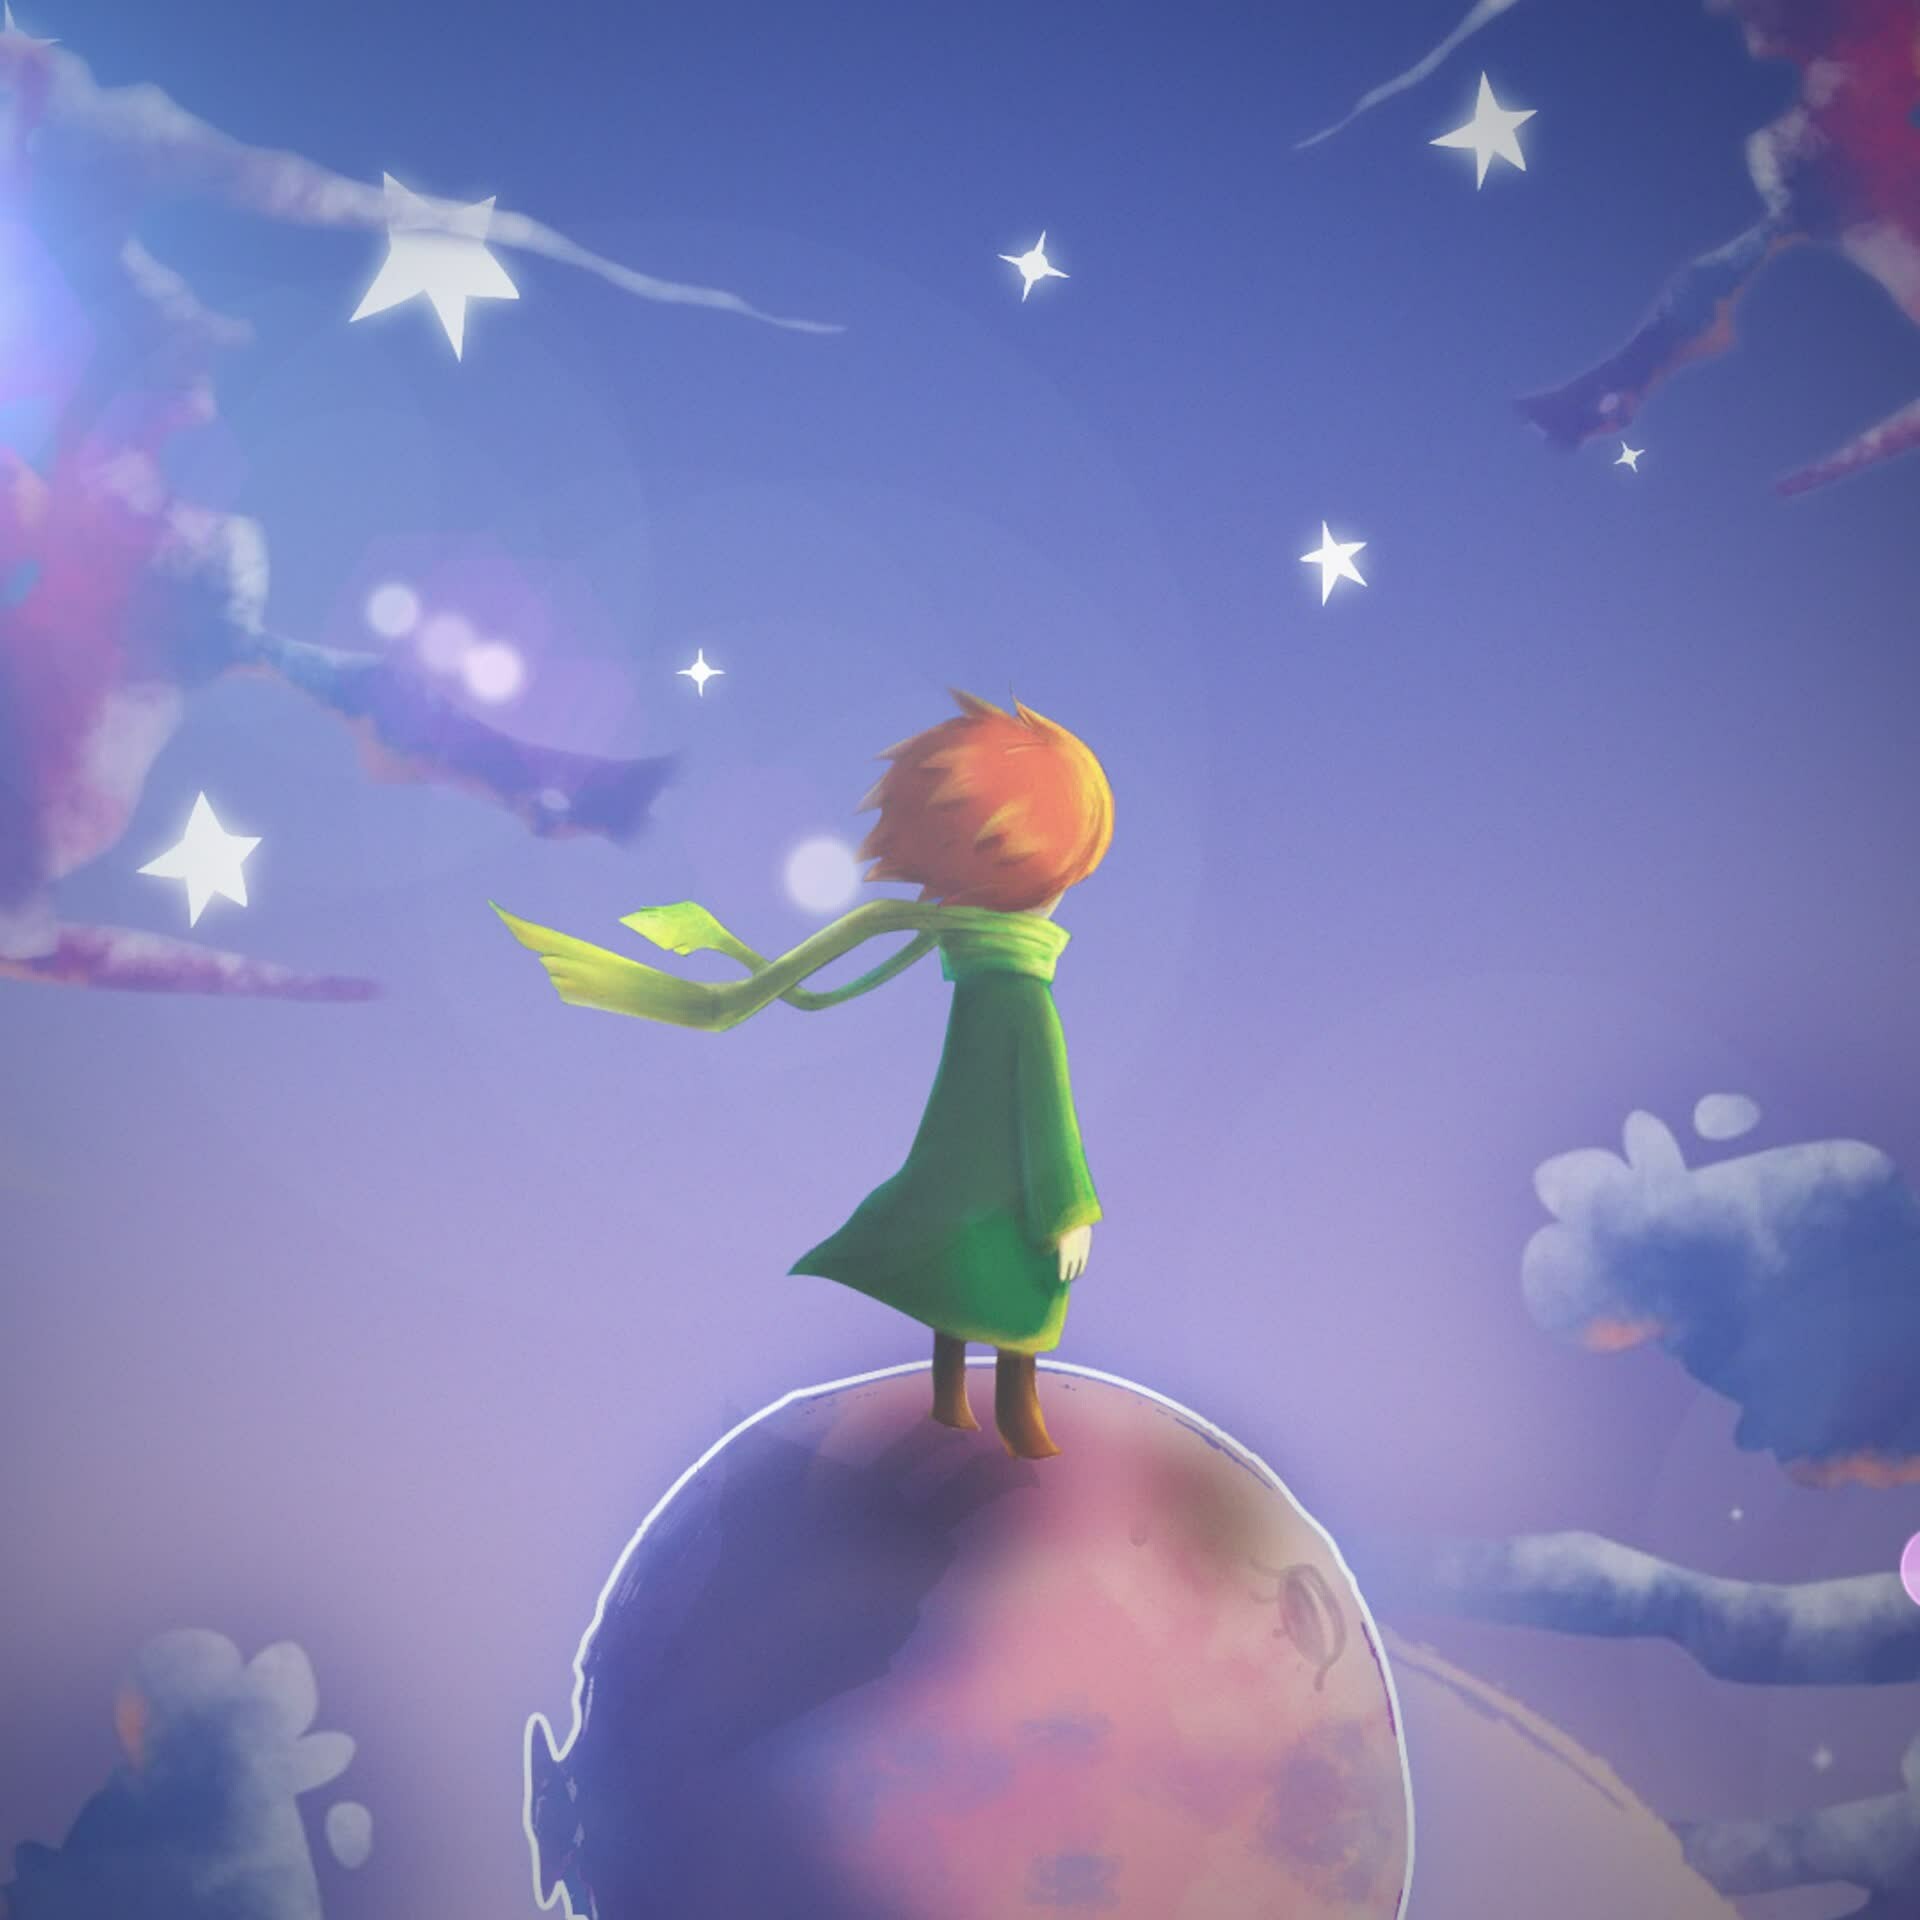 ArtStation - ART AudioBook Little Prince